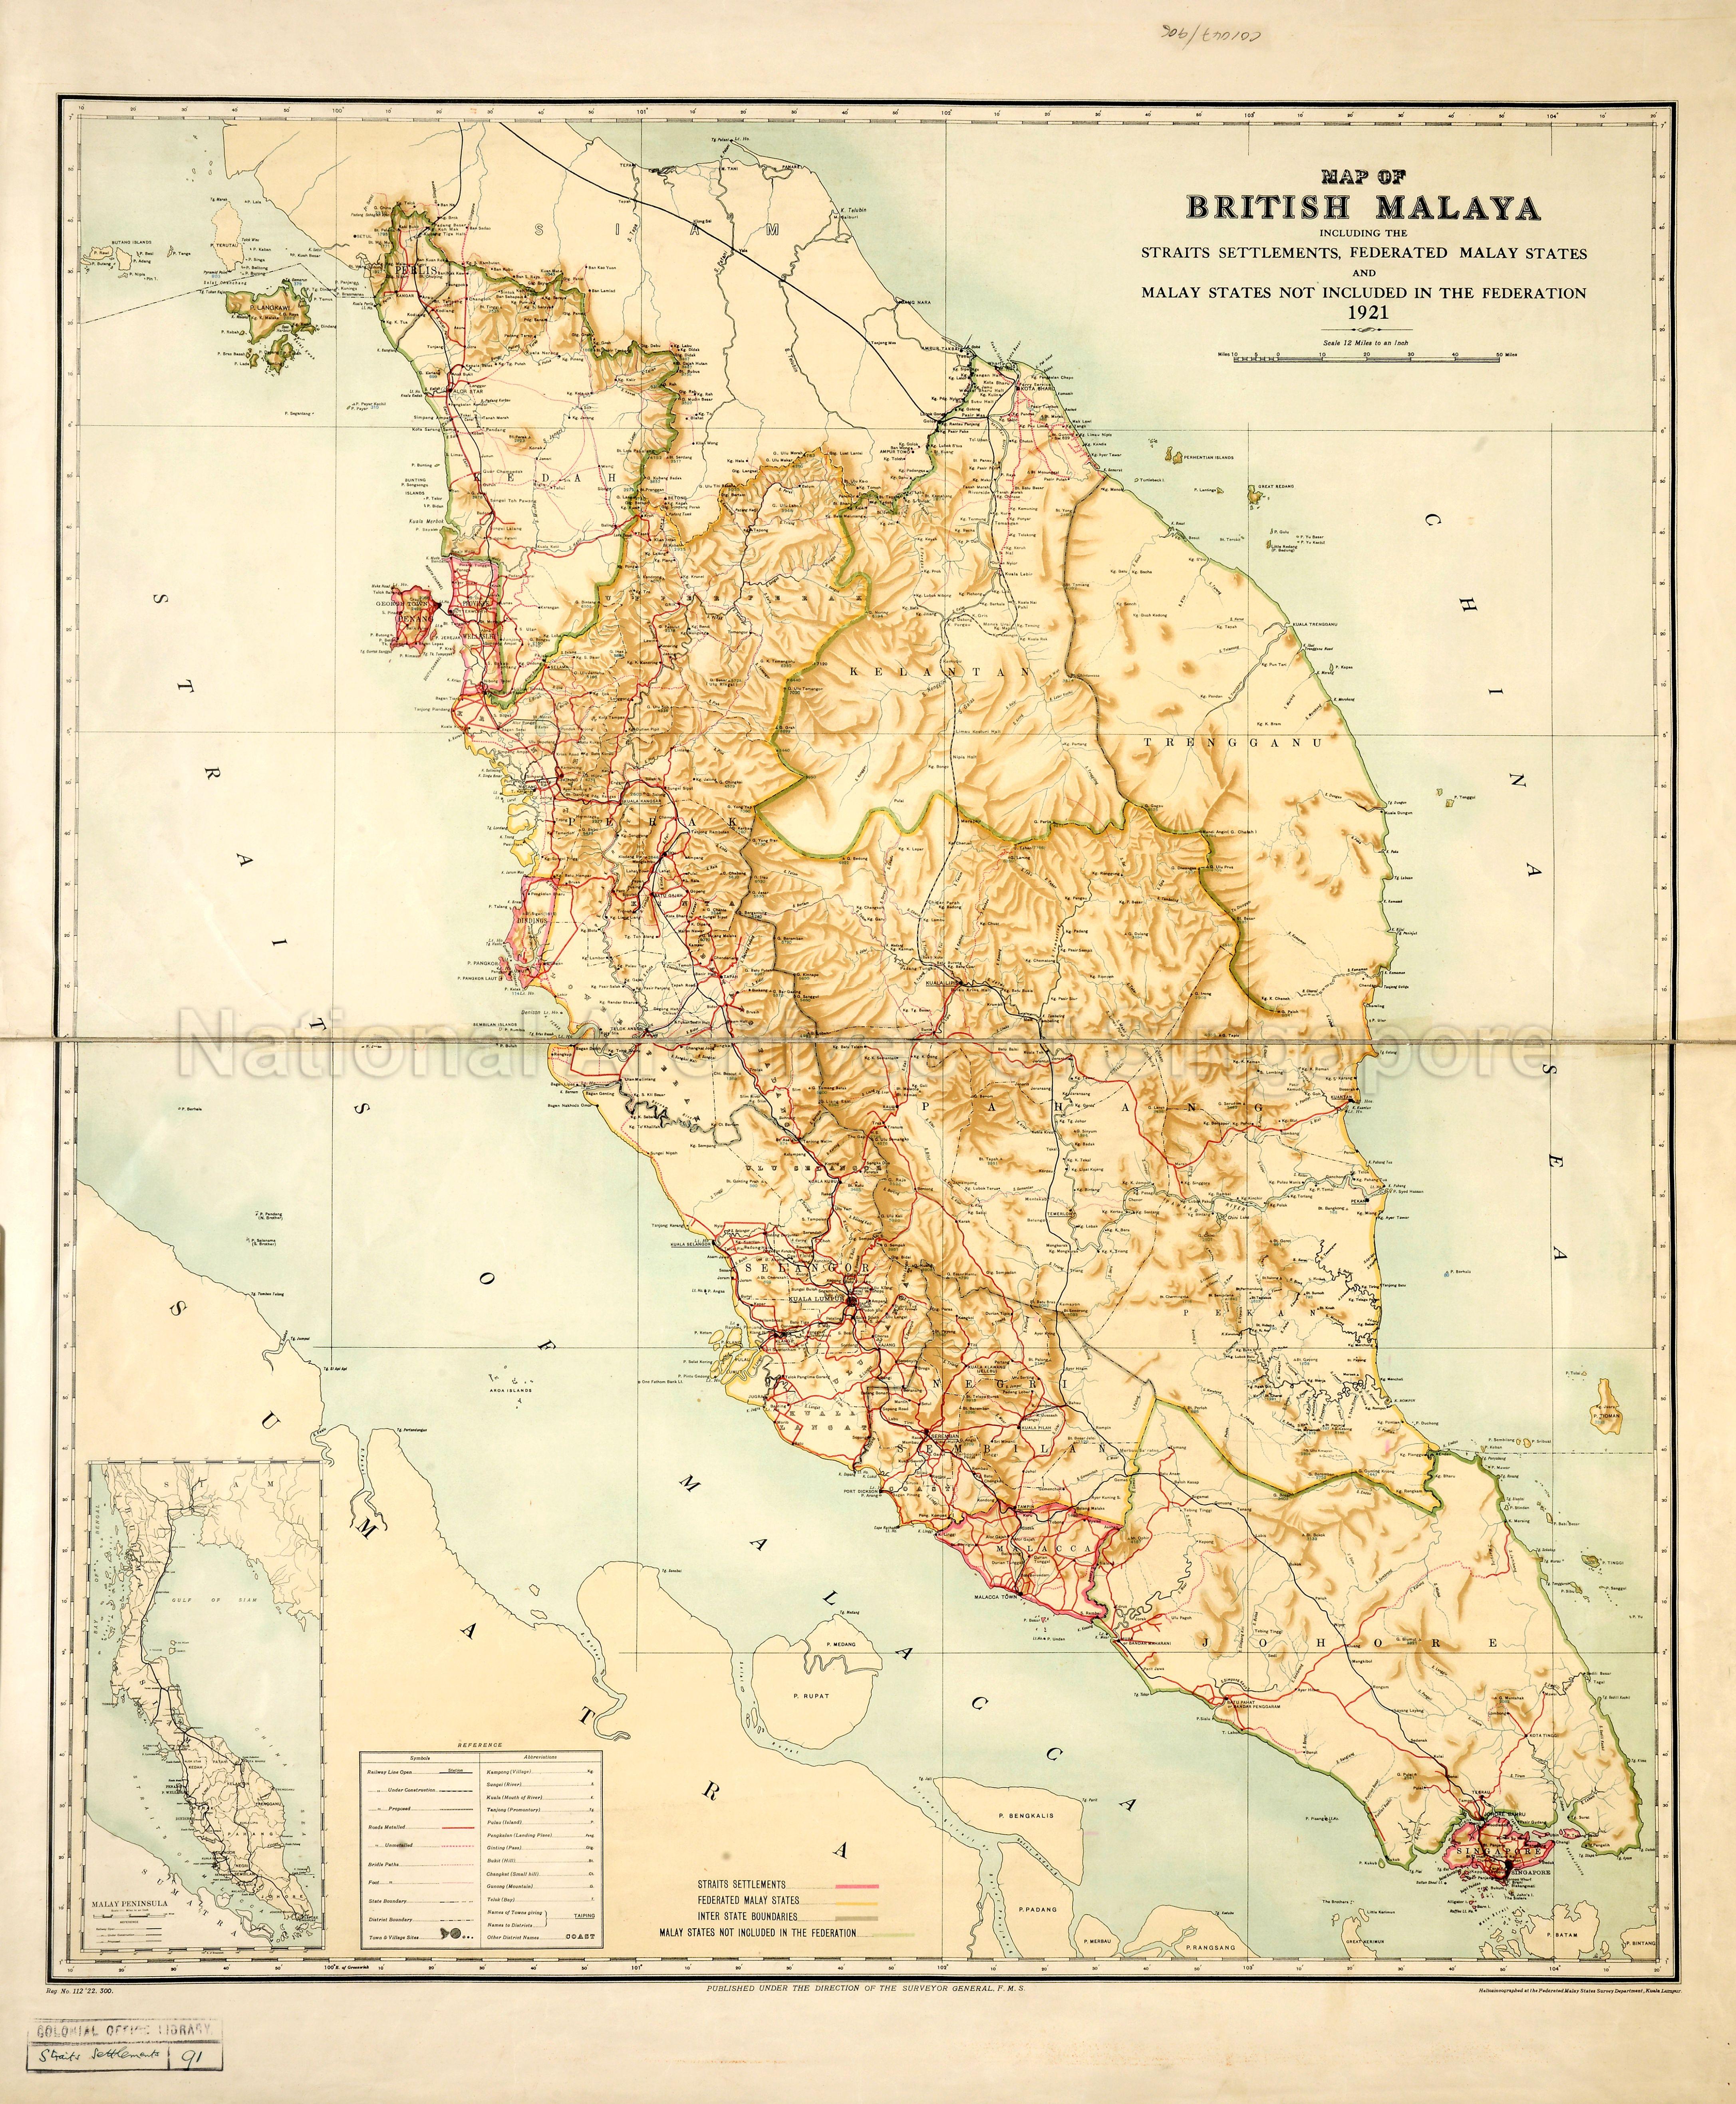 Map of British Malaya with an inset of the Malay Peninsula,